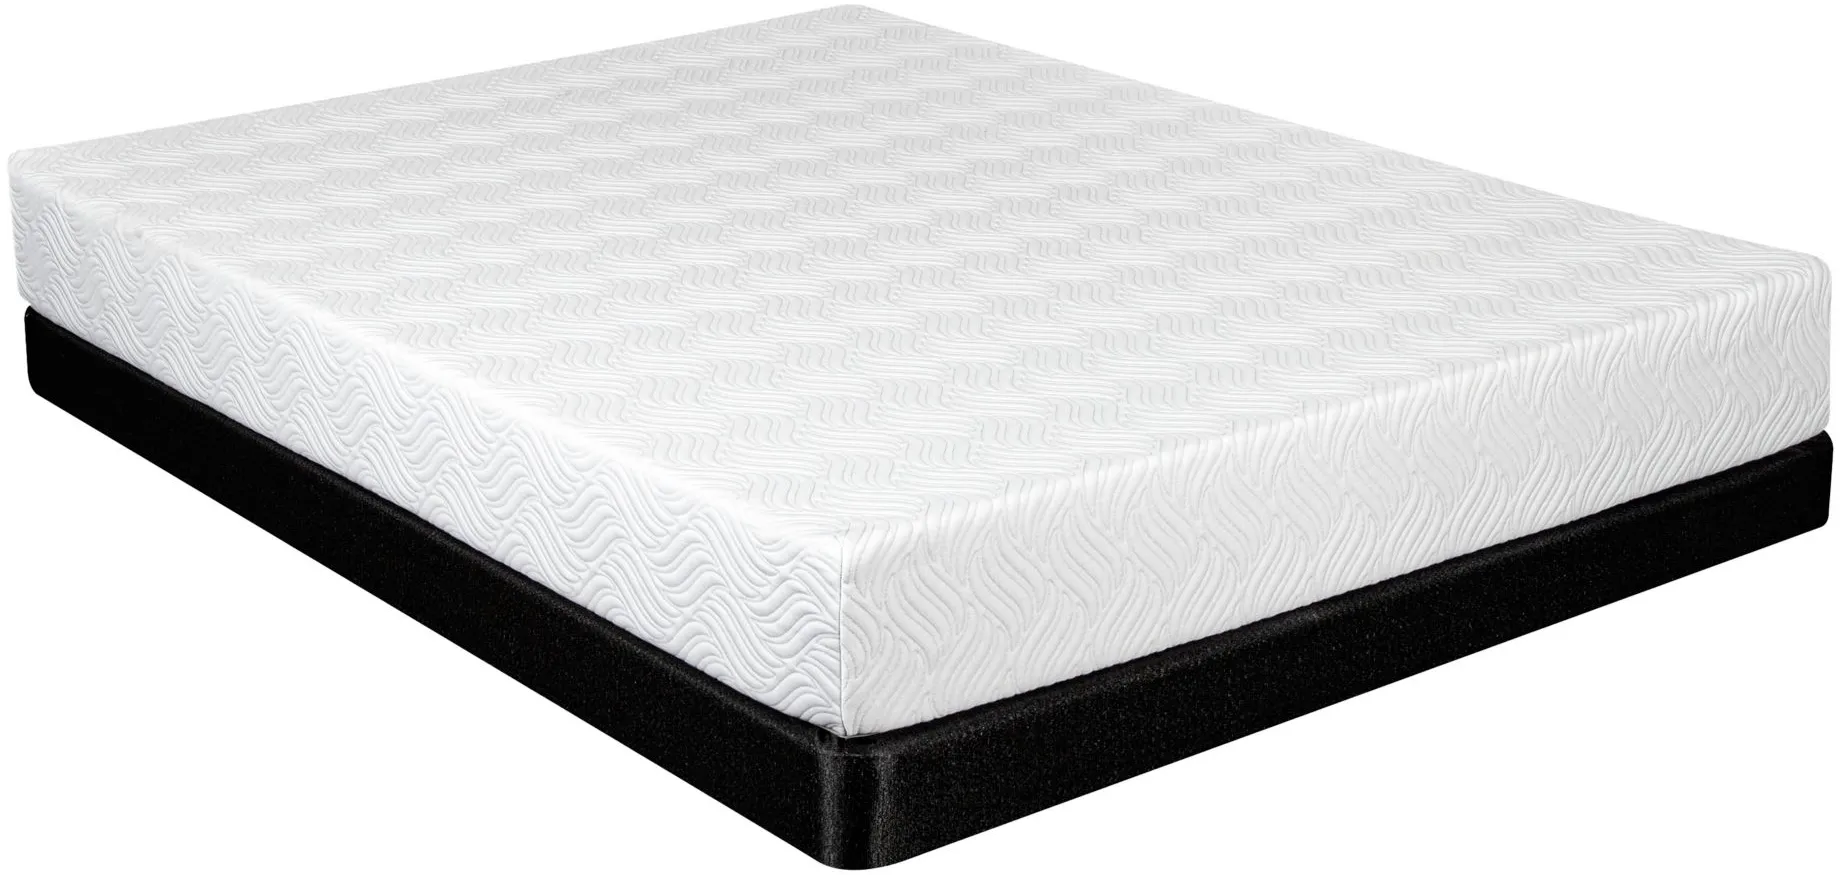 bellanest royal memory foam mattress reviews